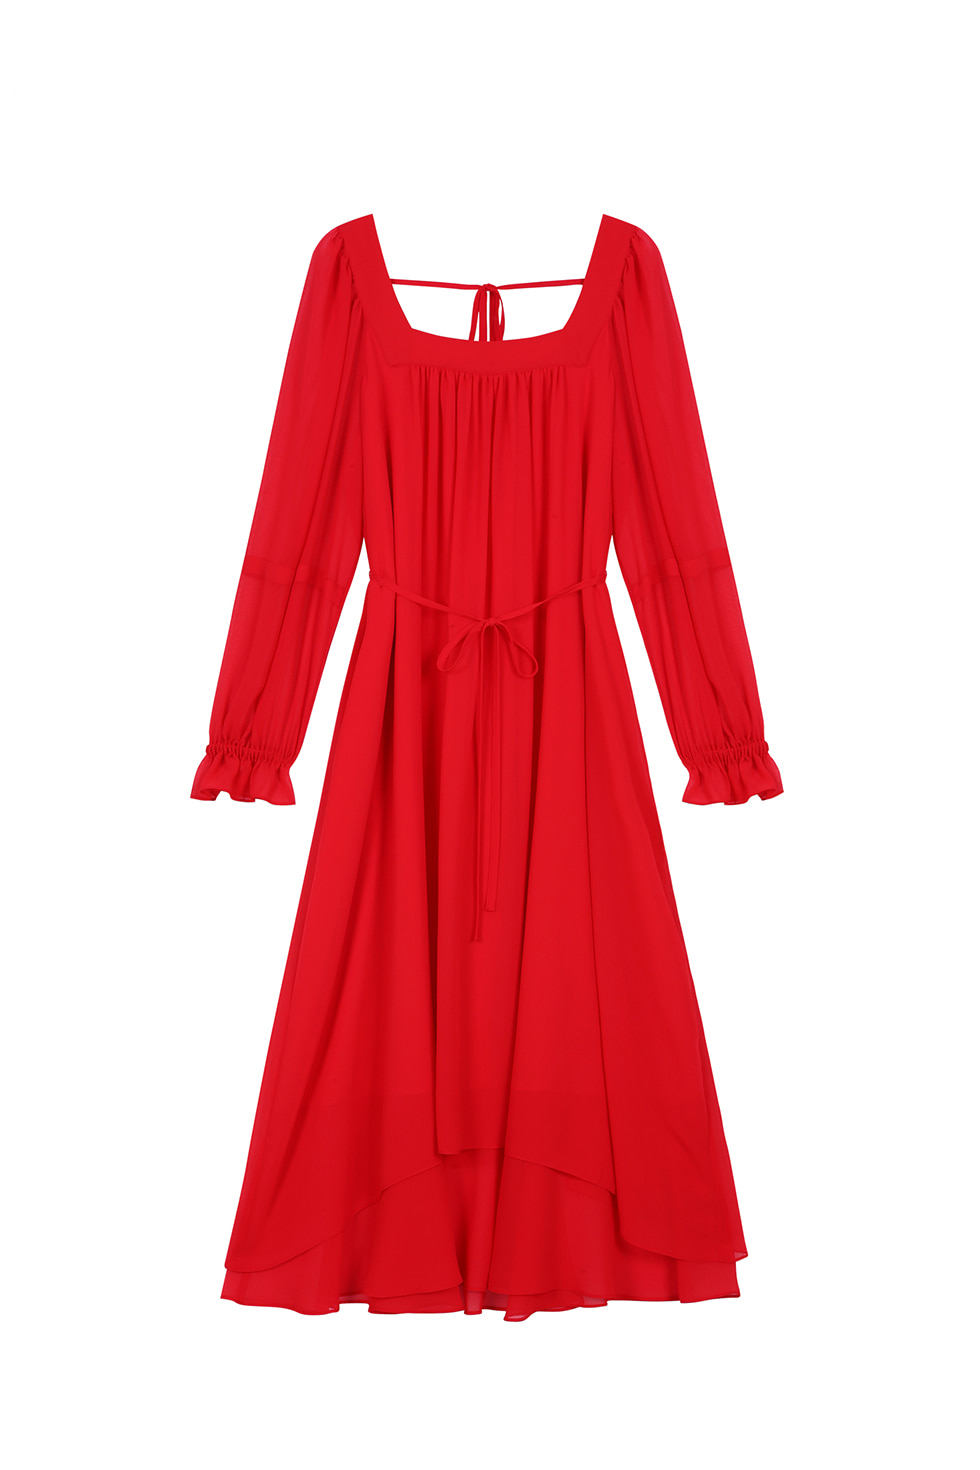 SQUARE NECK CHIFFON DRESS - RED